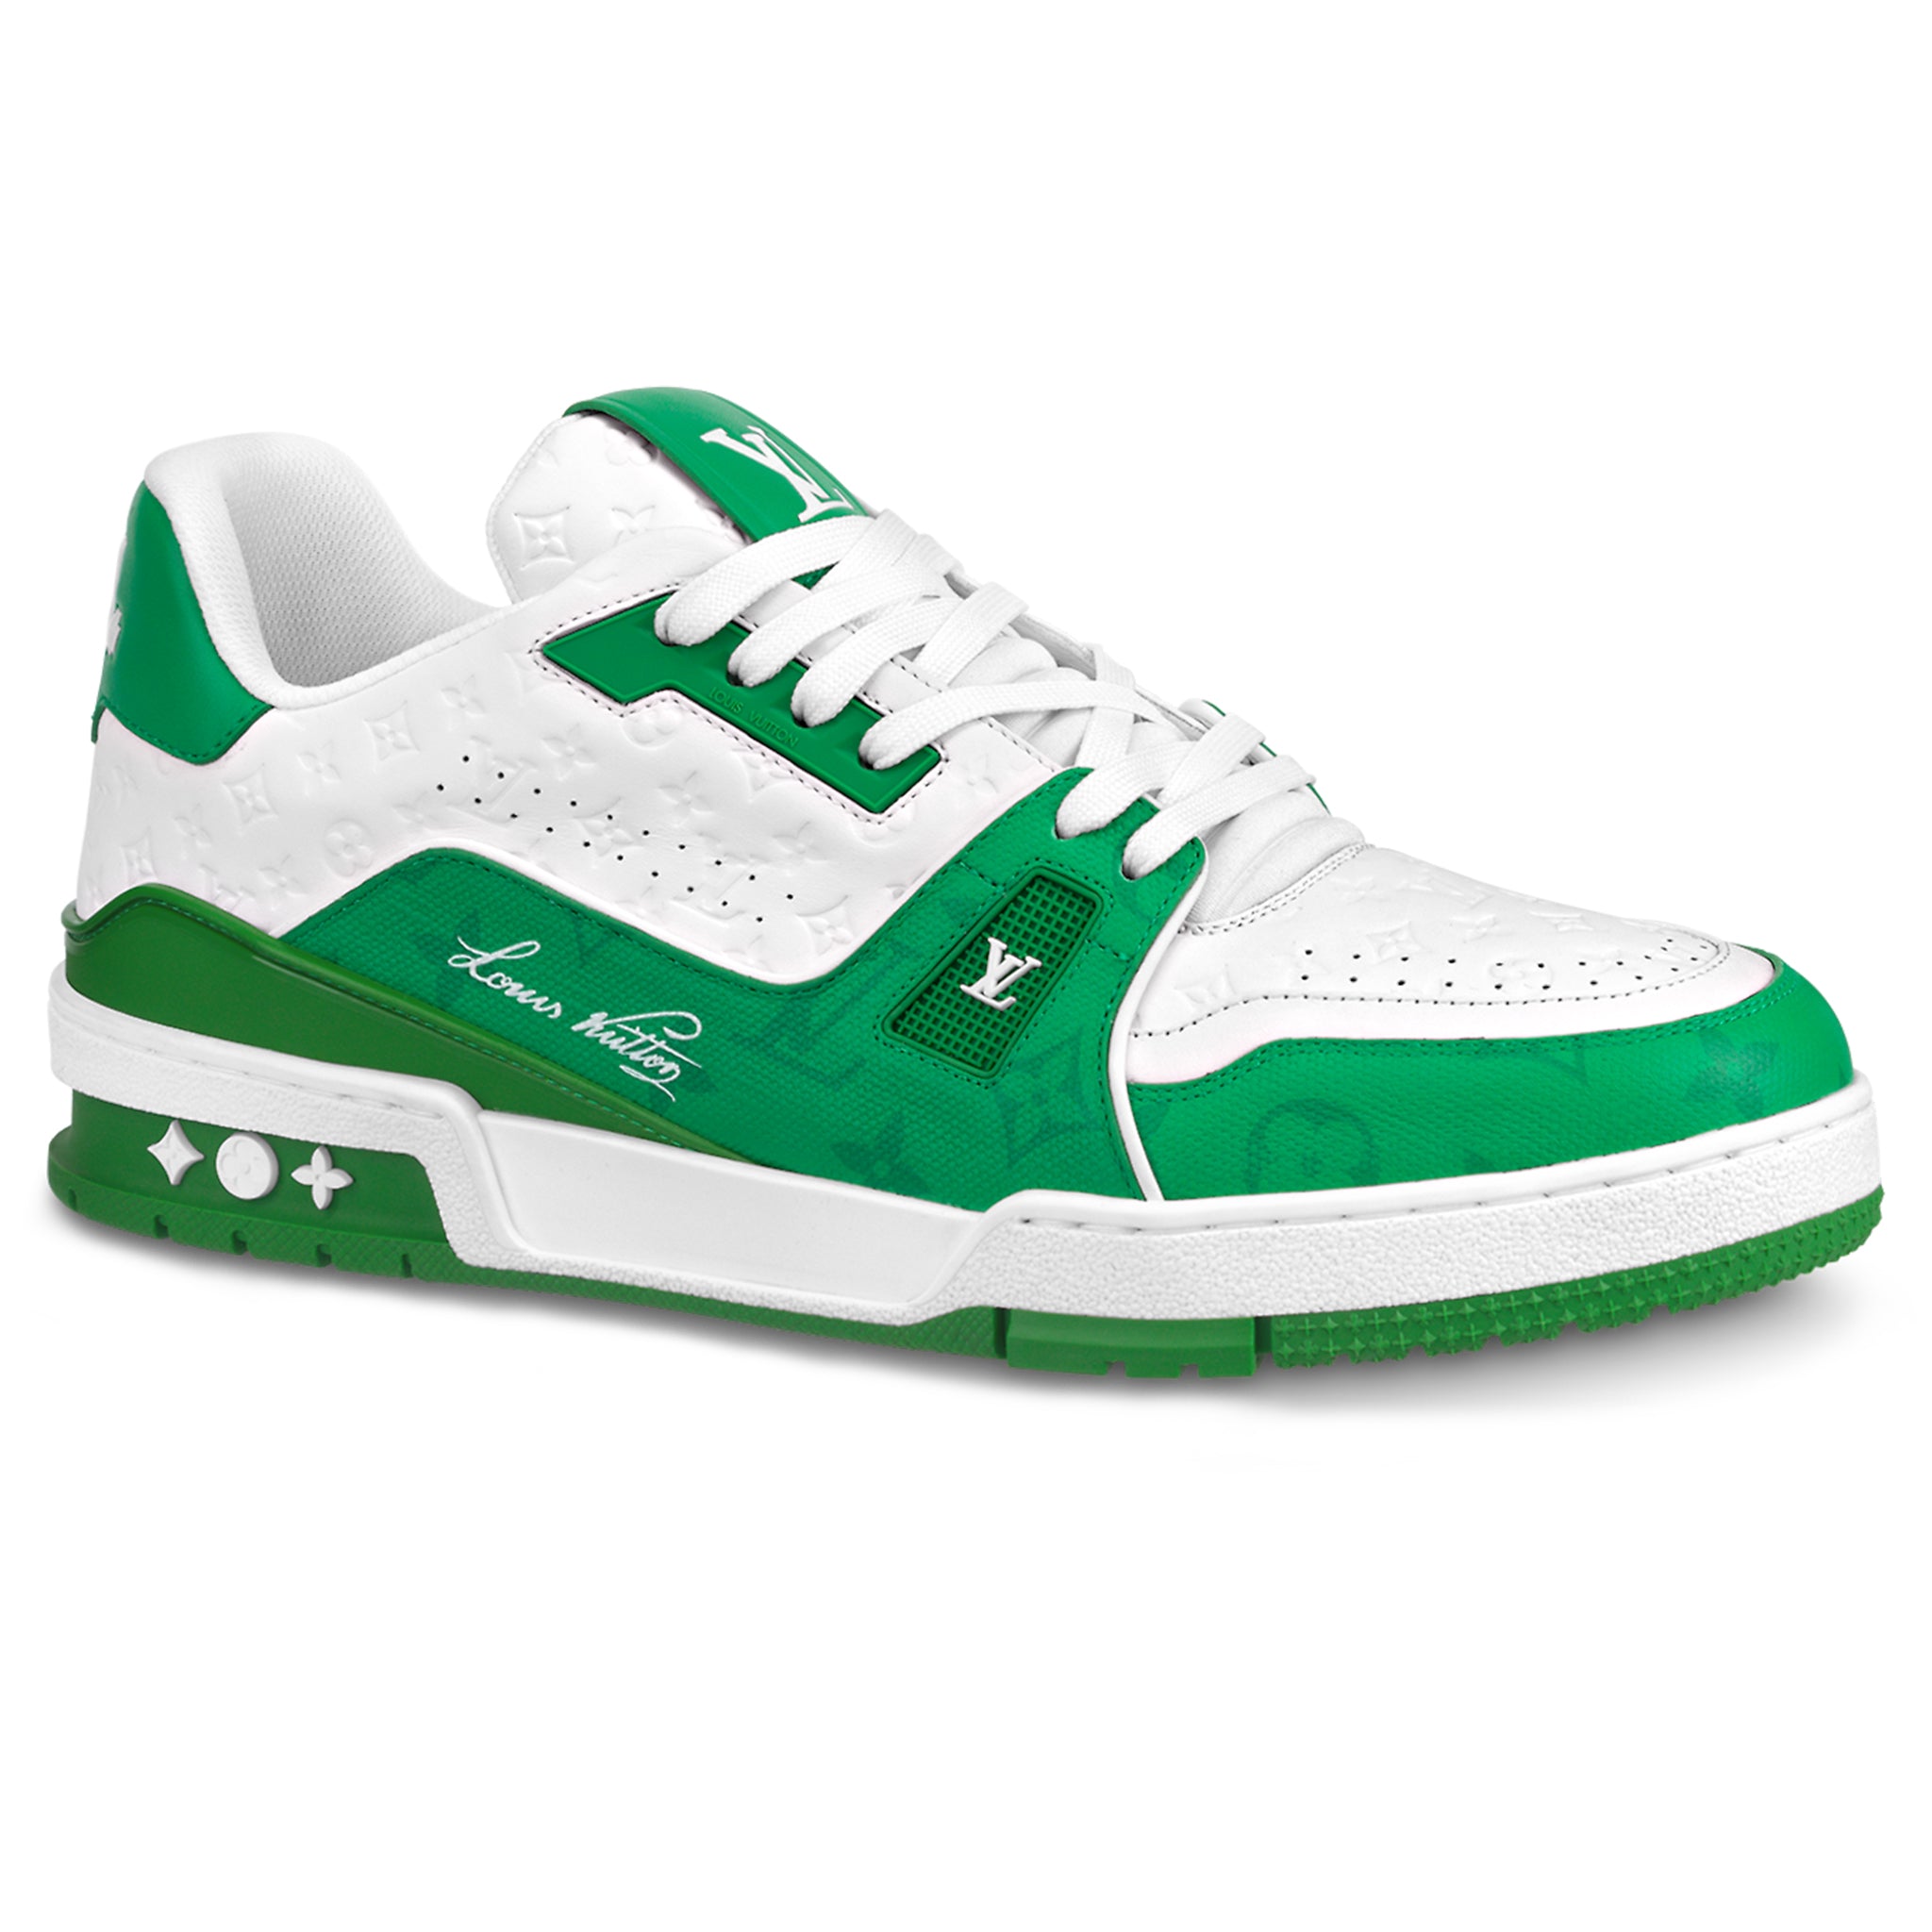 Louis Vuitton LV Trainer '54' White Green Sneaker - UK 7.5 / Green